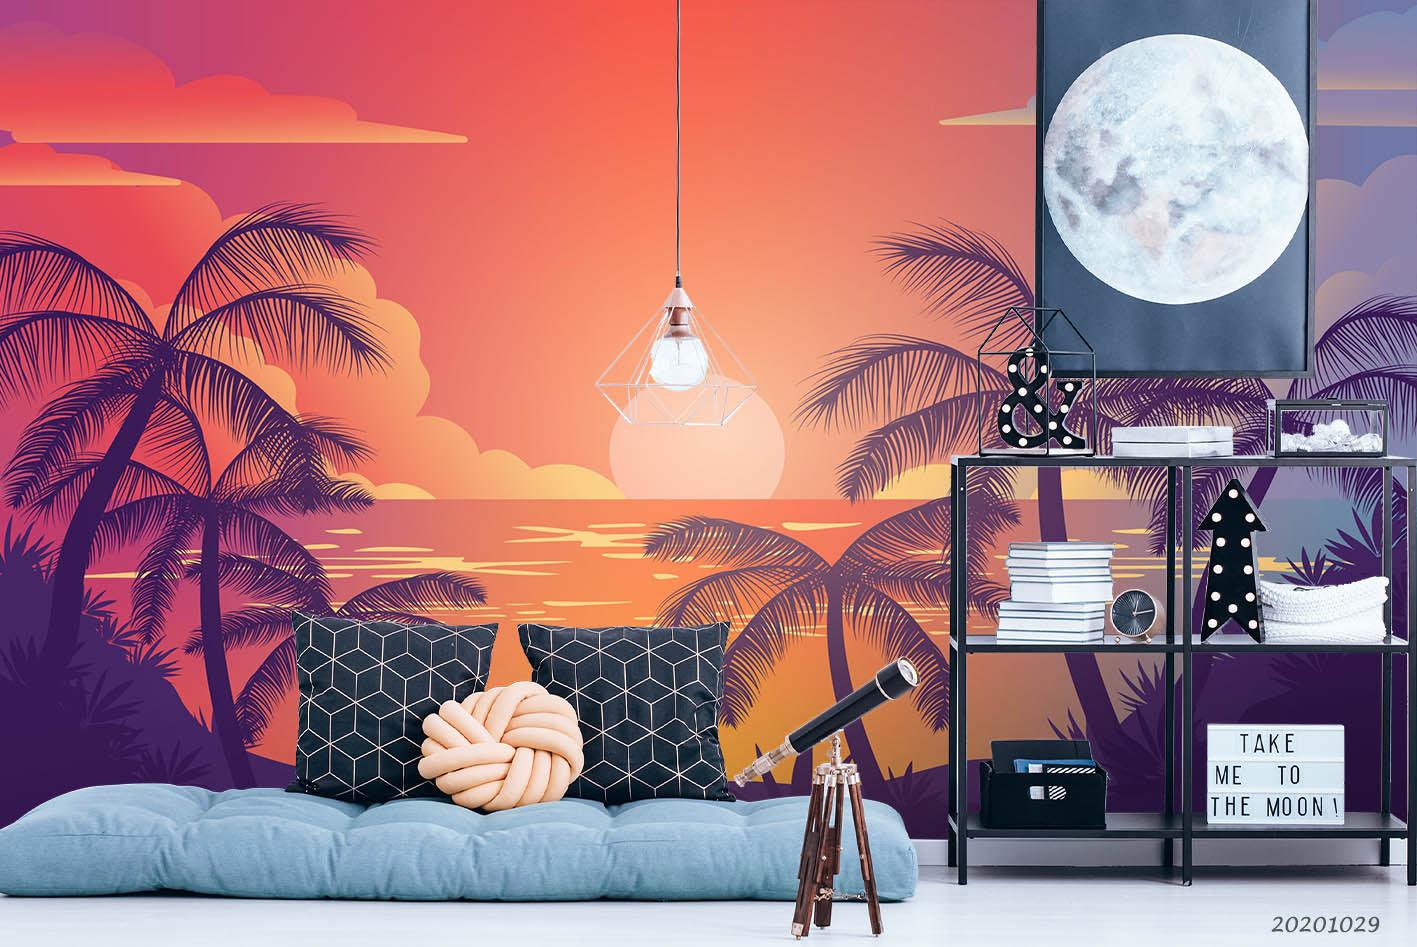 3D Colorful Sunrise Coconut Tree Silhouettes Wall Mural Wallpaper WJ 9786- Jess Art Decoration